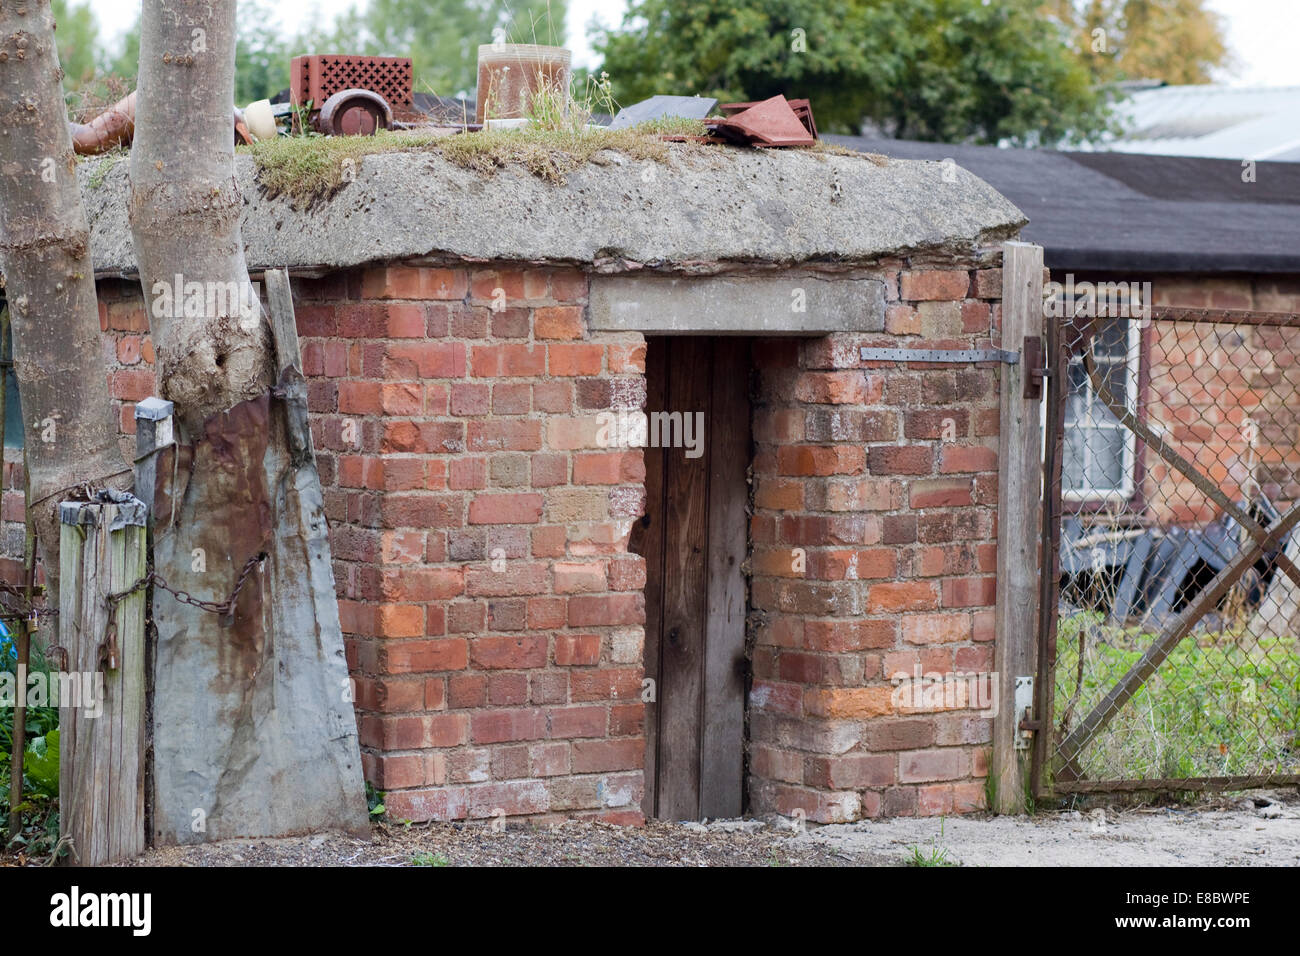 Old run down brick shelter Stock Photo: 74020422 - Alamy